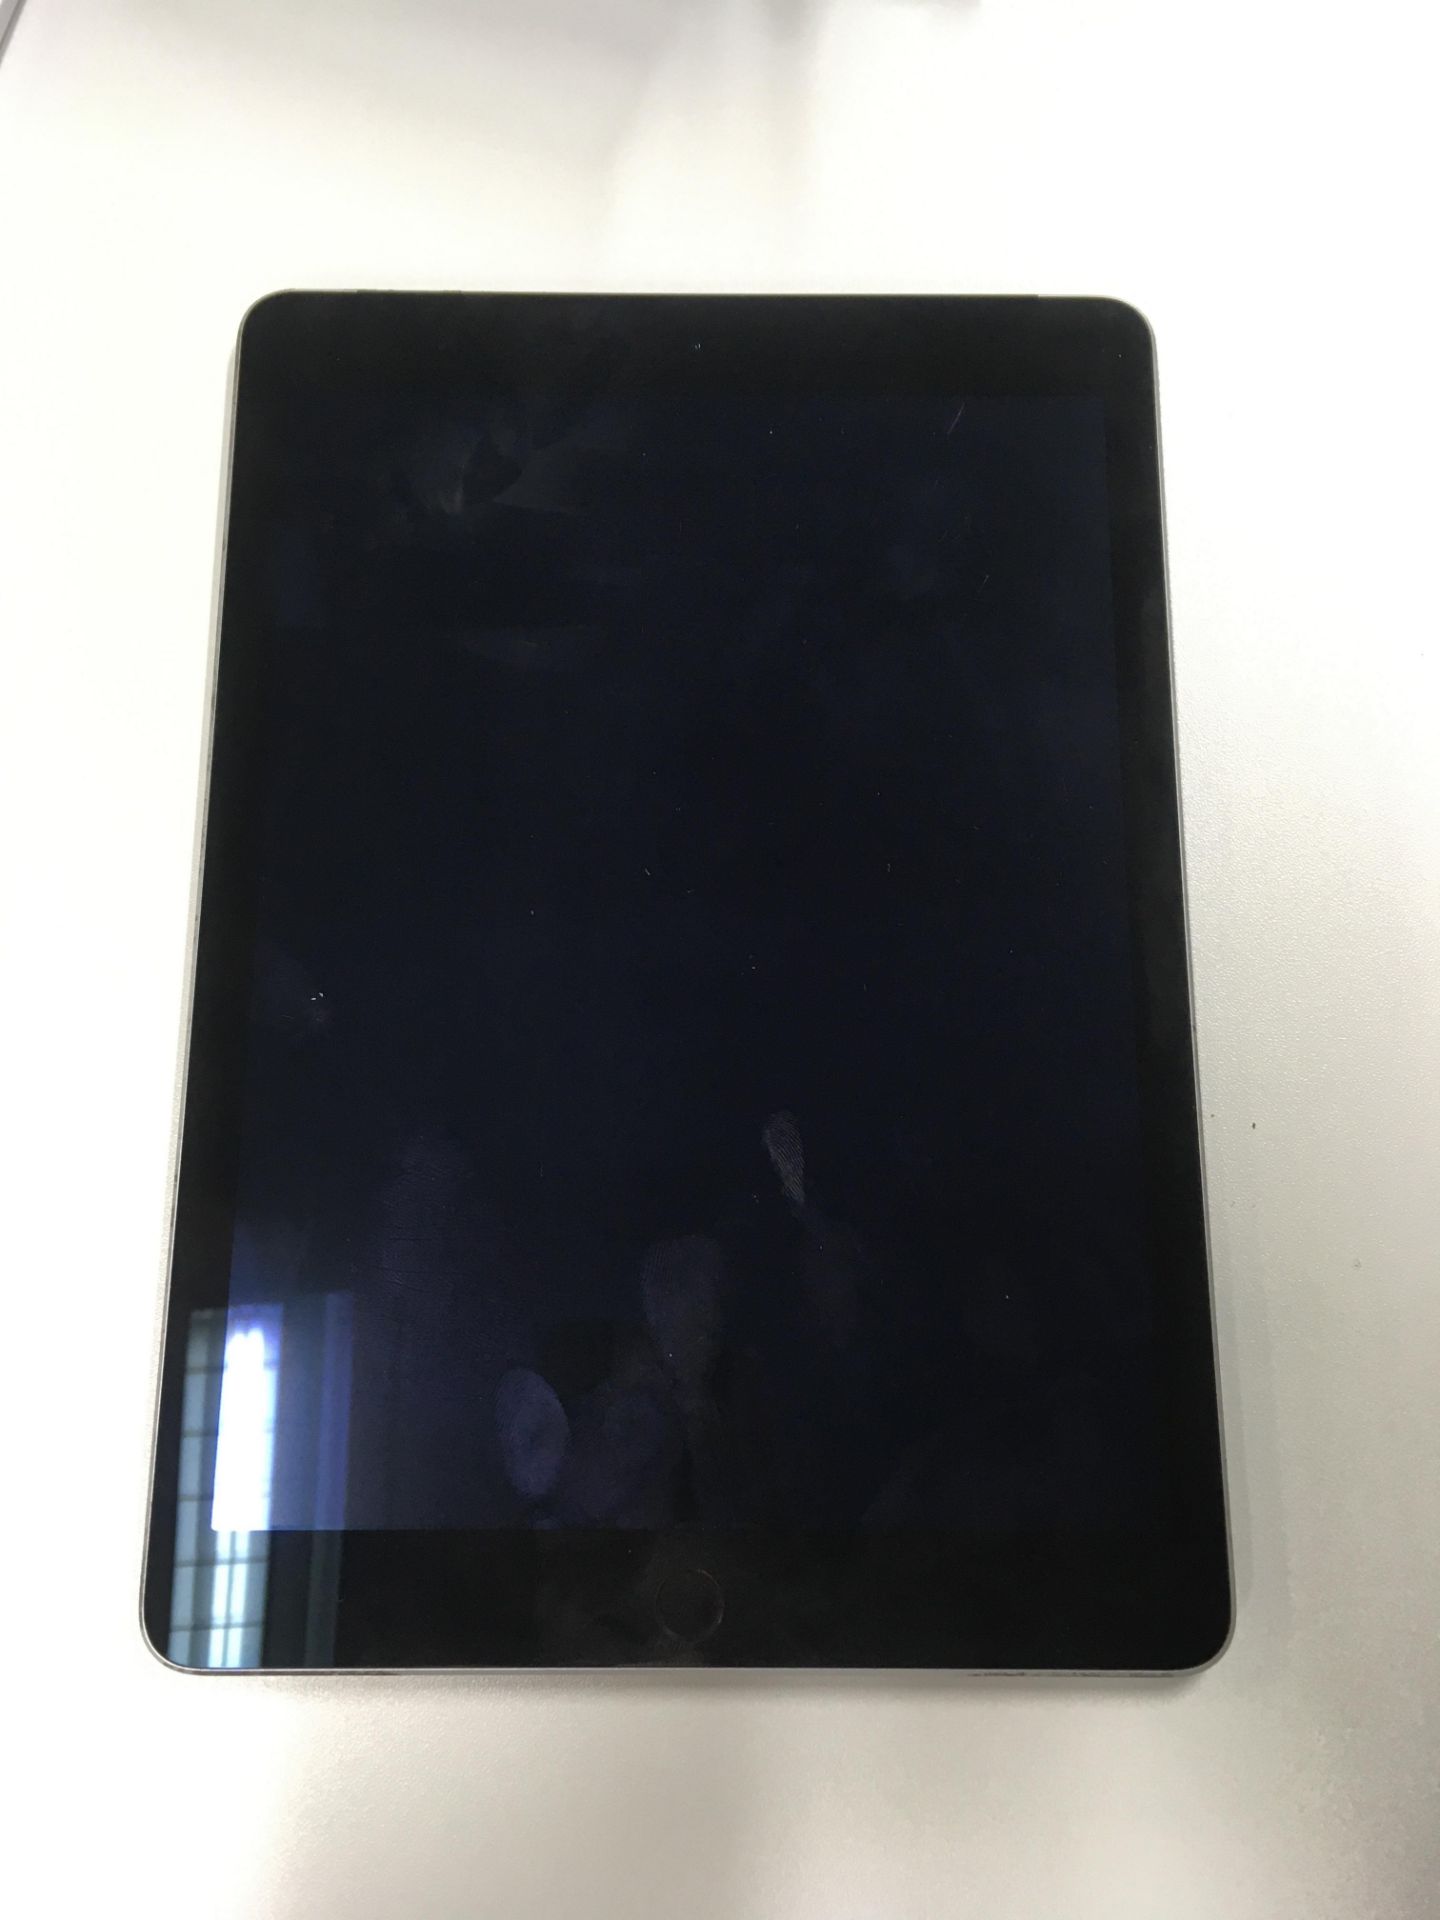 Apple iPad Air 2 9.7" Space Grey 128 GB WiFi & Cellular - Image 2 of 2